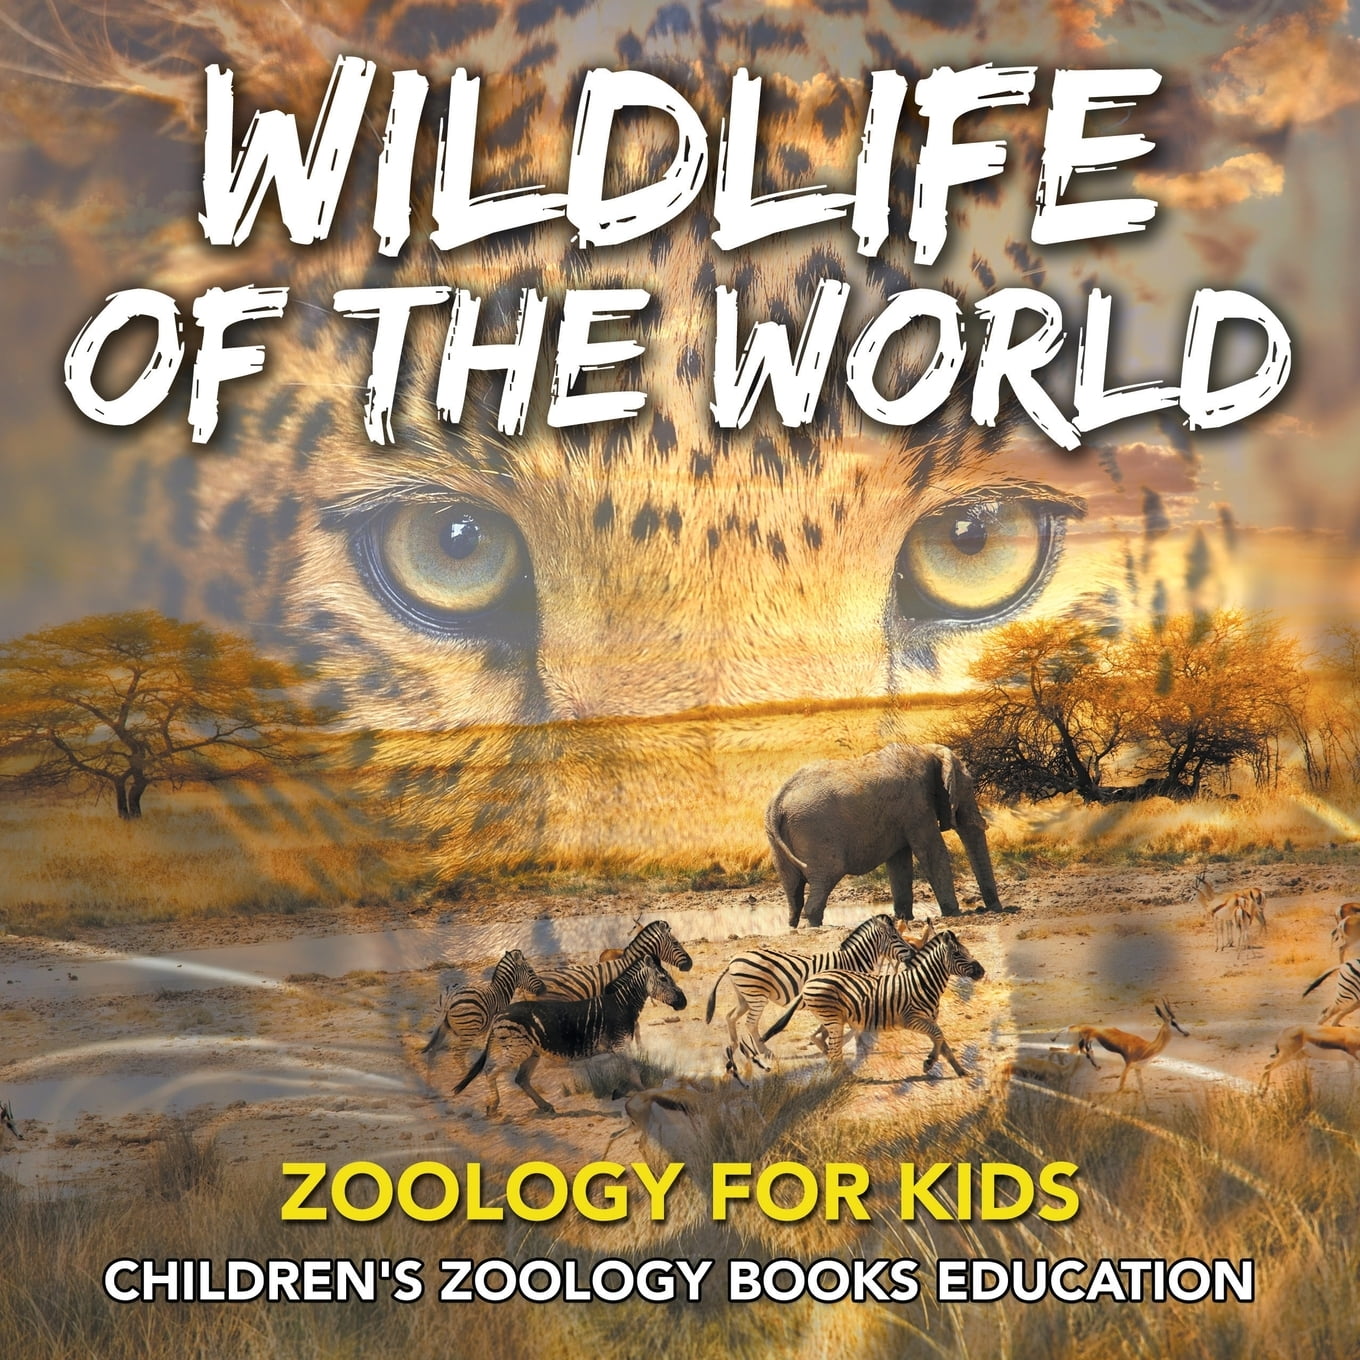 good zoology books